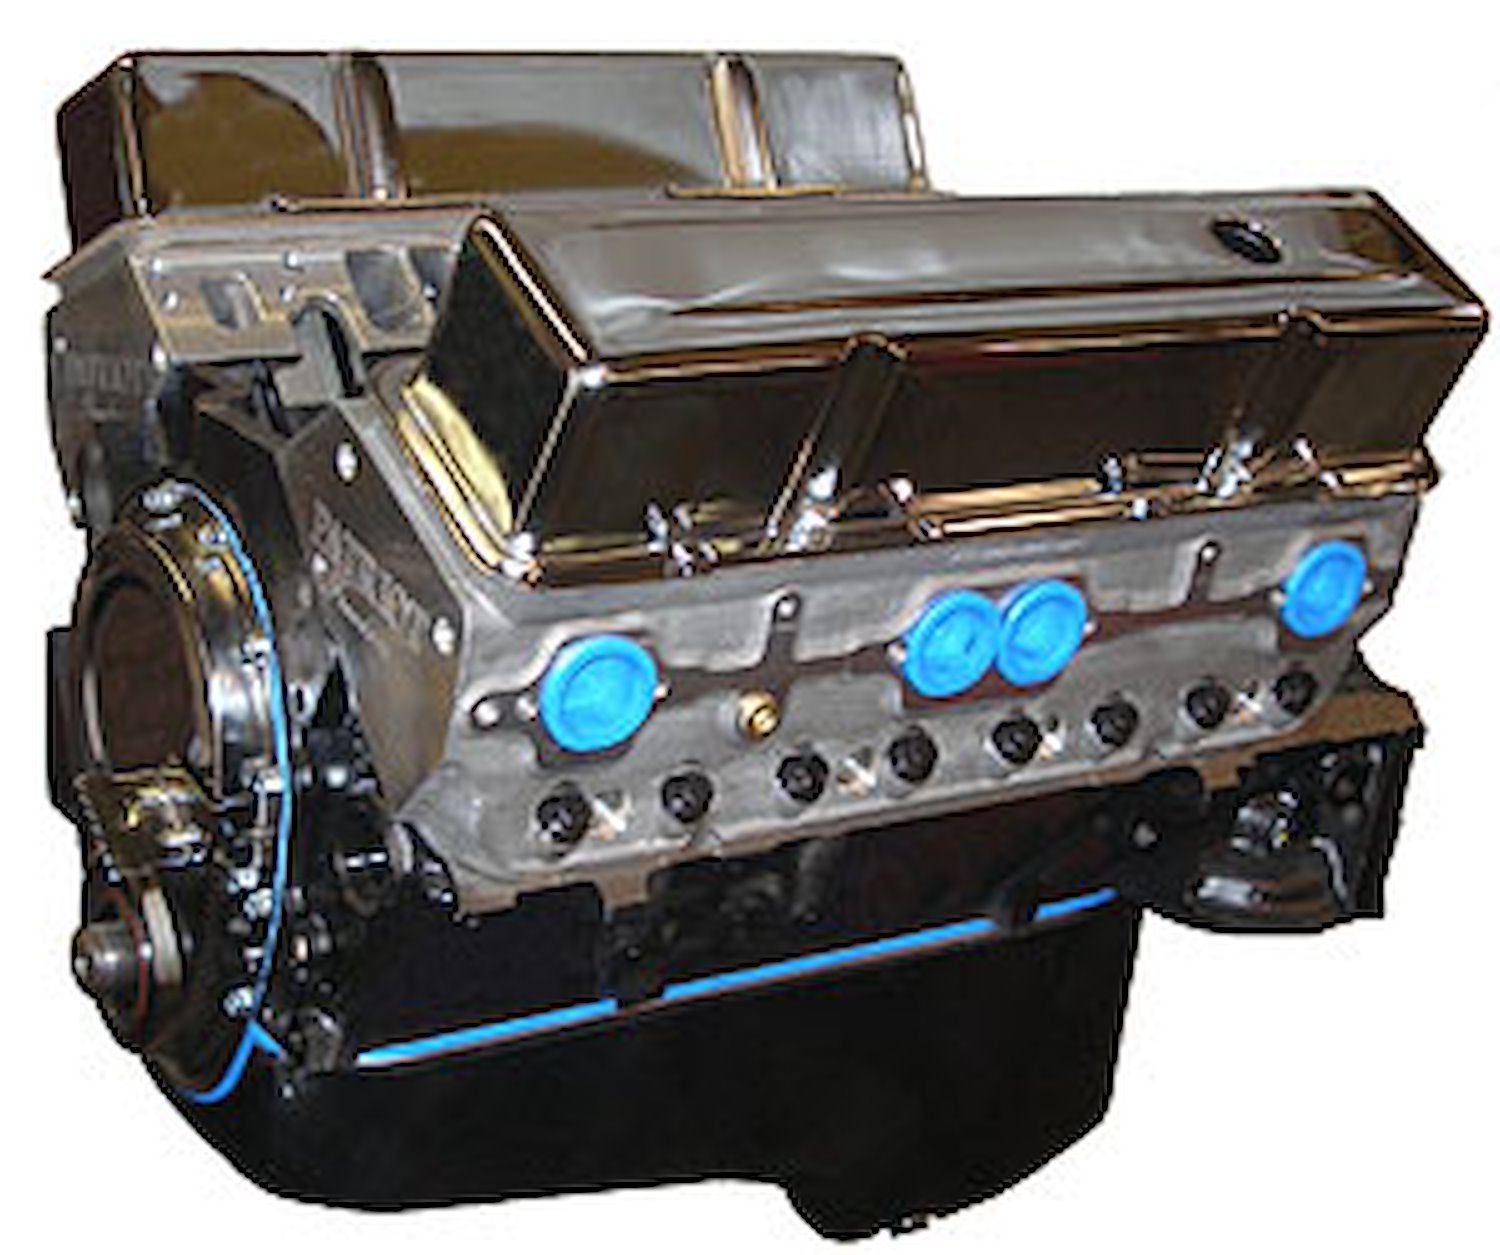 Budget Stomper Small Block Chevy 383ci Base Engine w/Aluminum Heads 420HP/440TQ